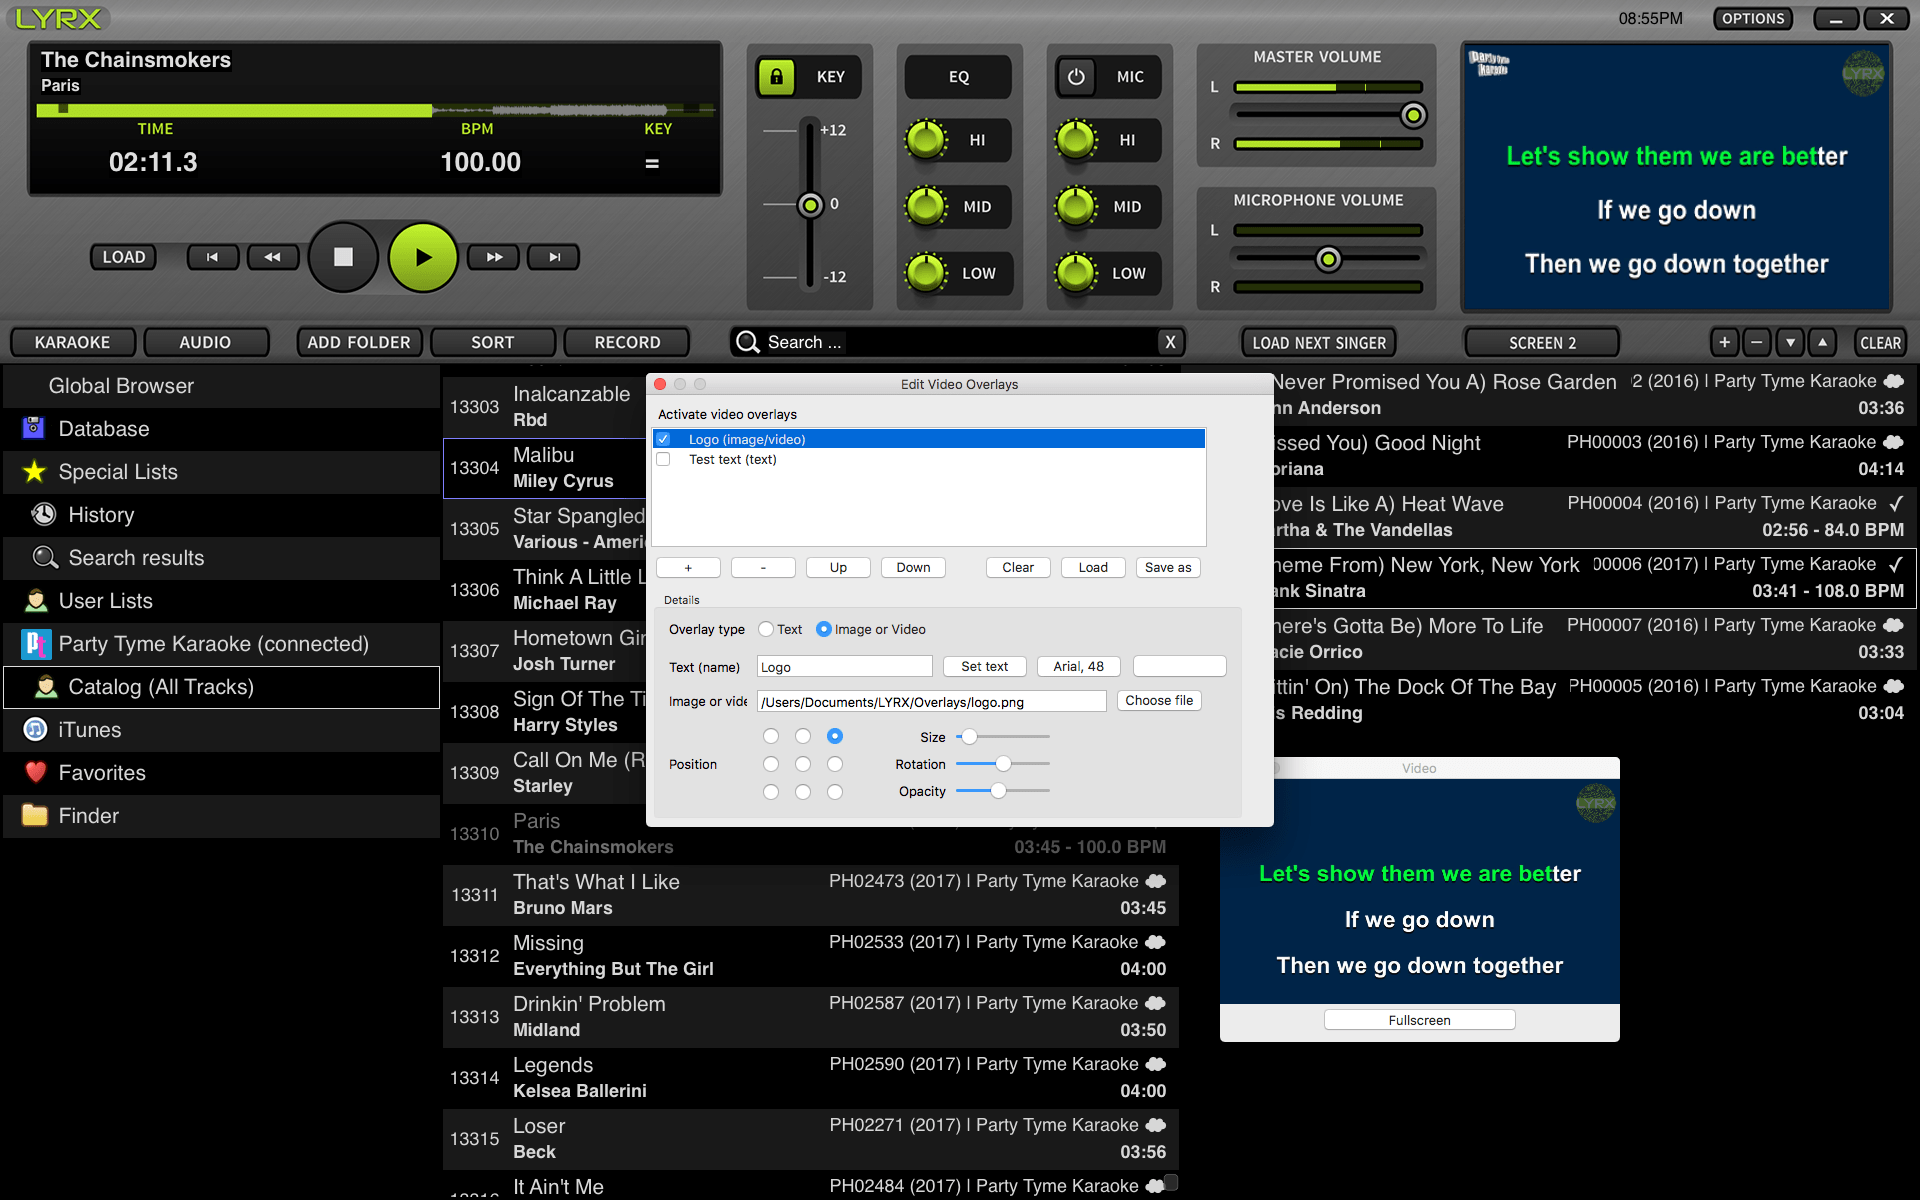 Pcdj lyrx karaoke software for mac